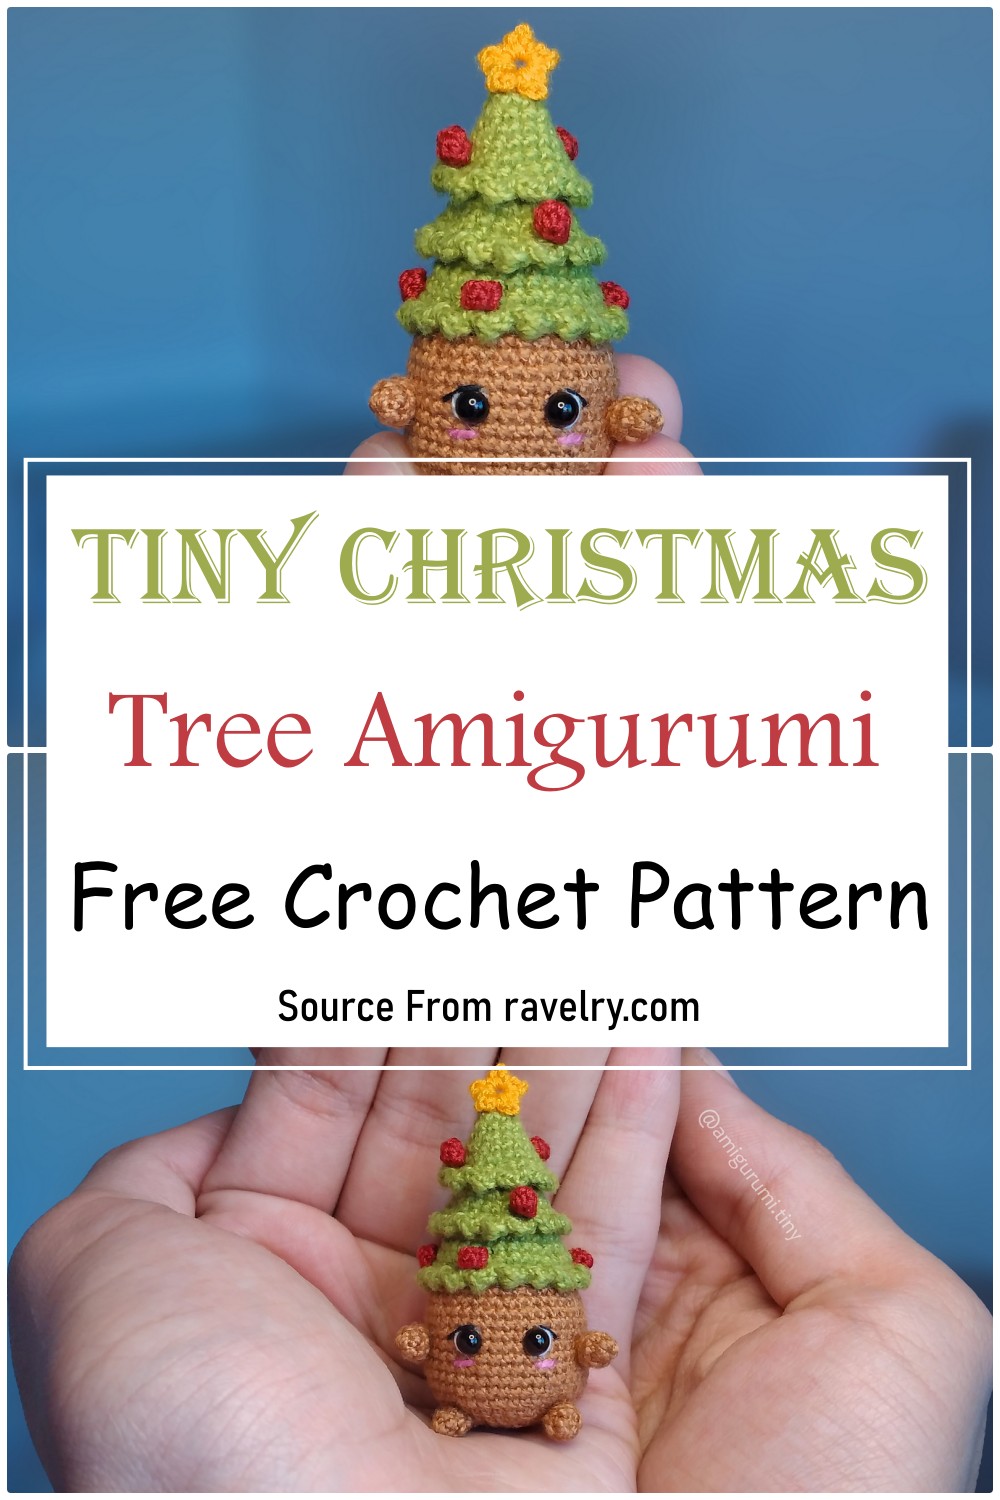 Tiny Christmas Tree Amigurumi